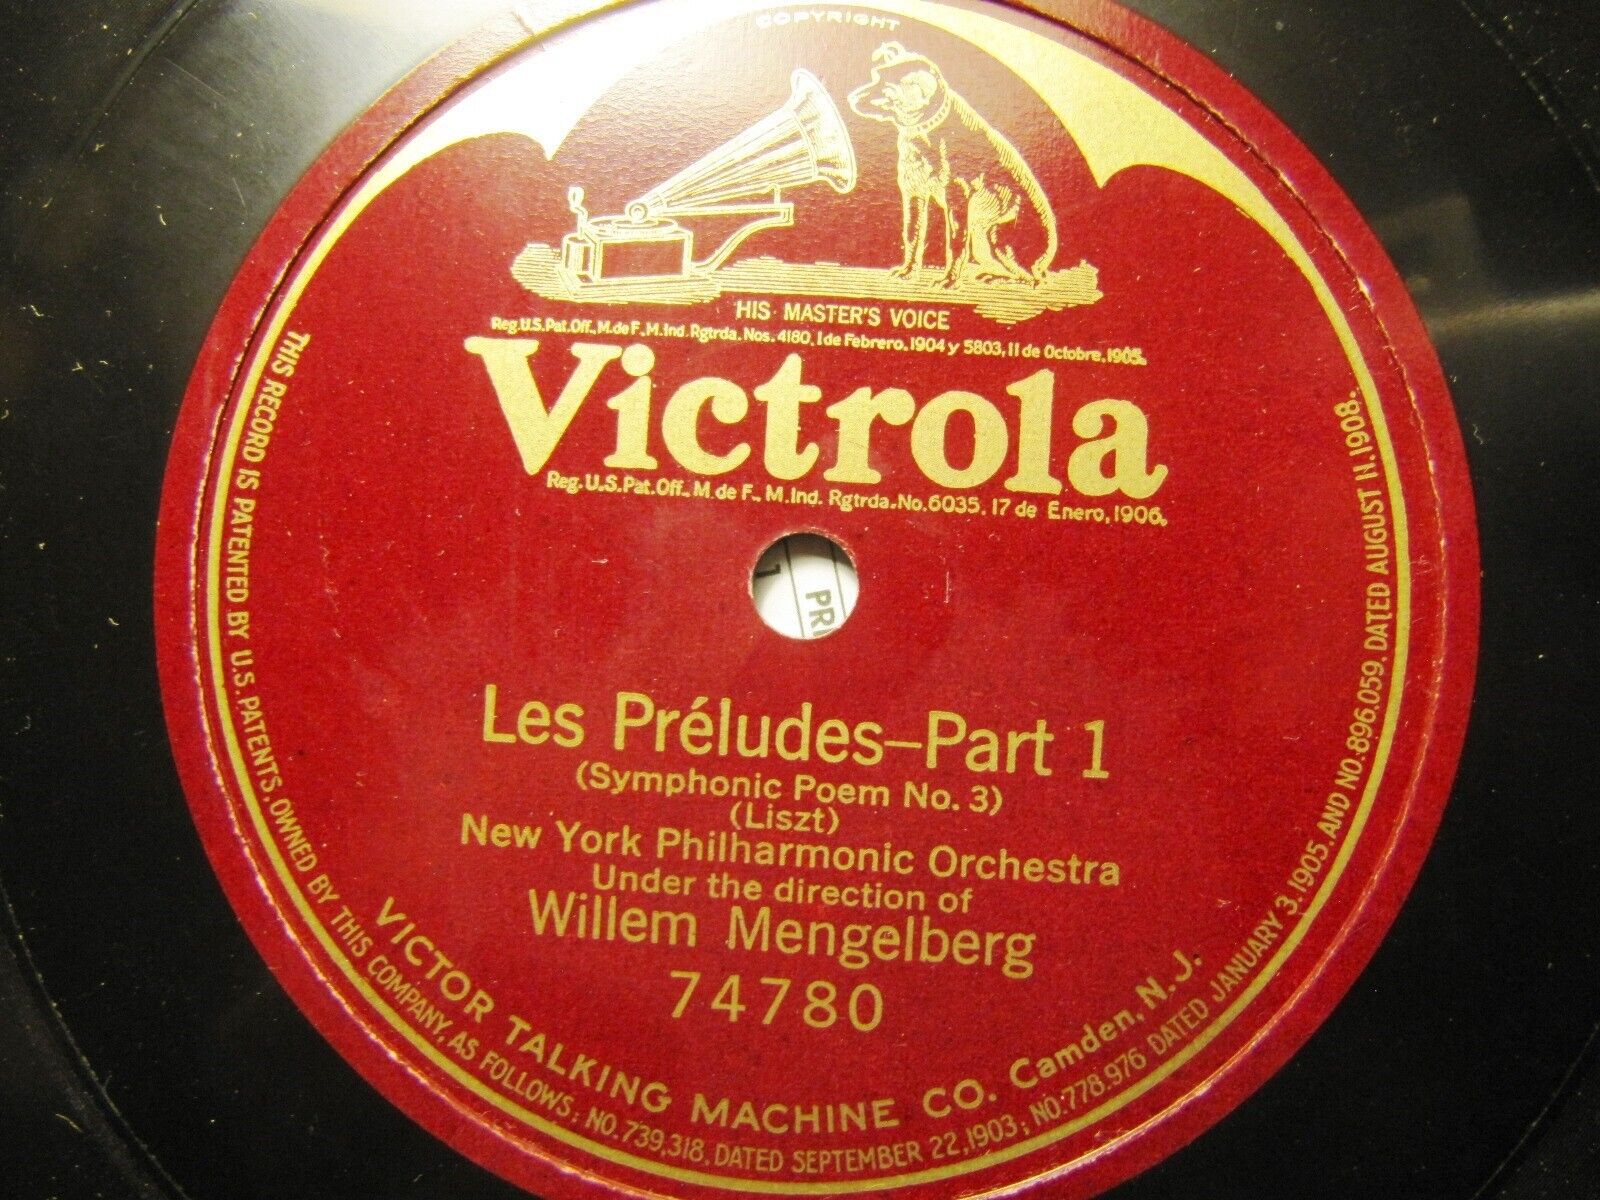 1922 WILLEM MENGELBERG Liszt LES PRELUDES Part 1 NY Philharmonic VICTOR 74780